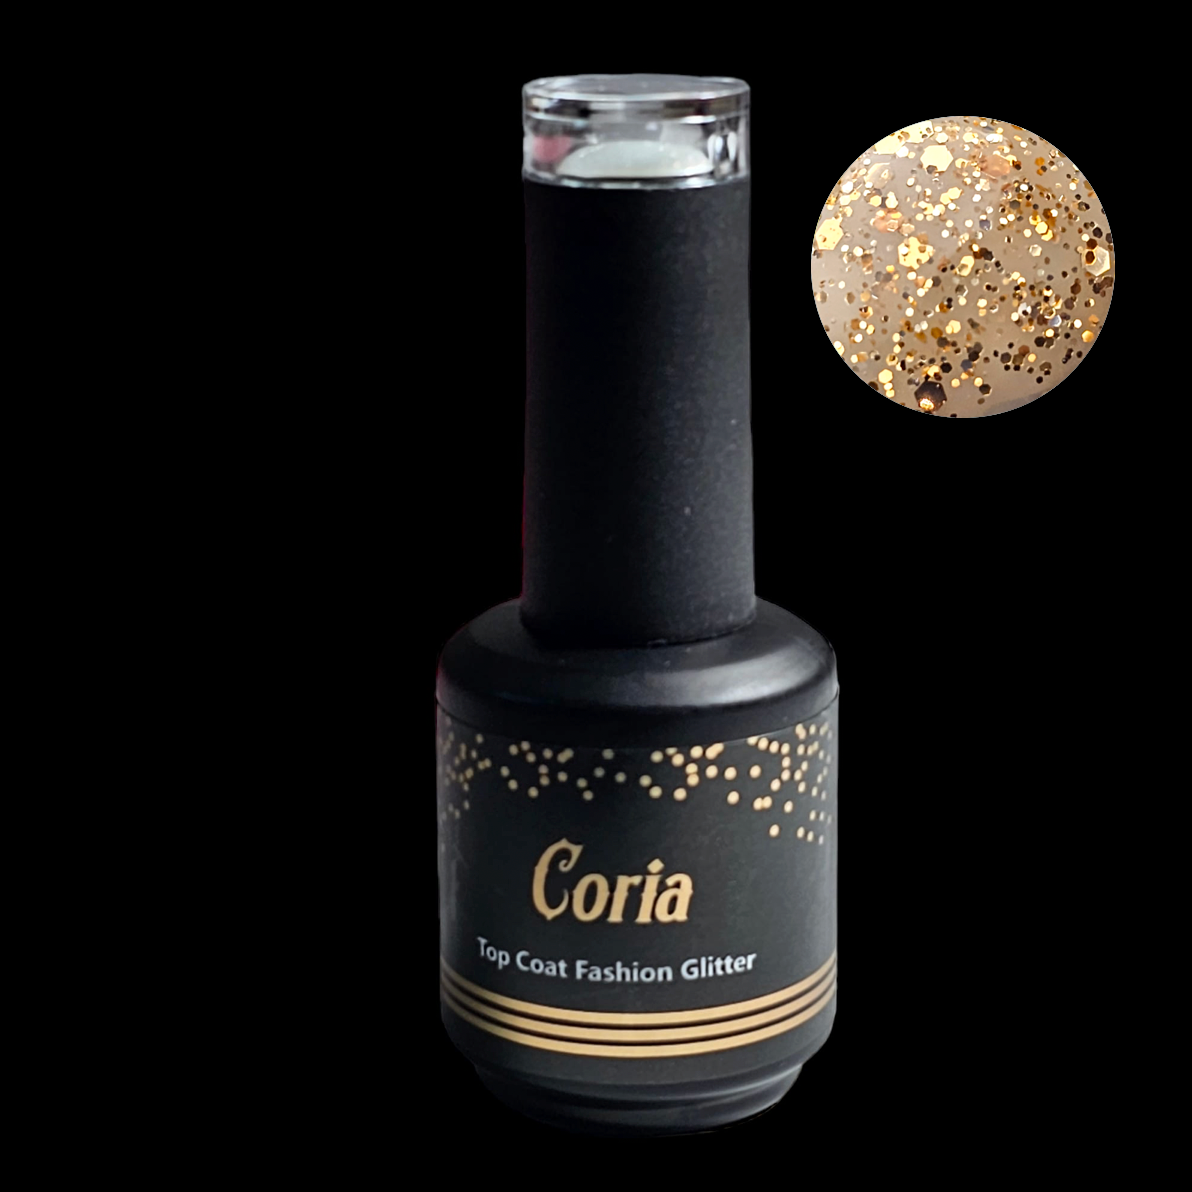 Top Coat Fashion Glitter Coria 15 ml 111